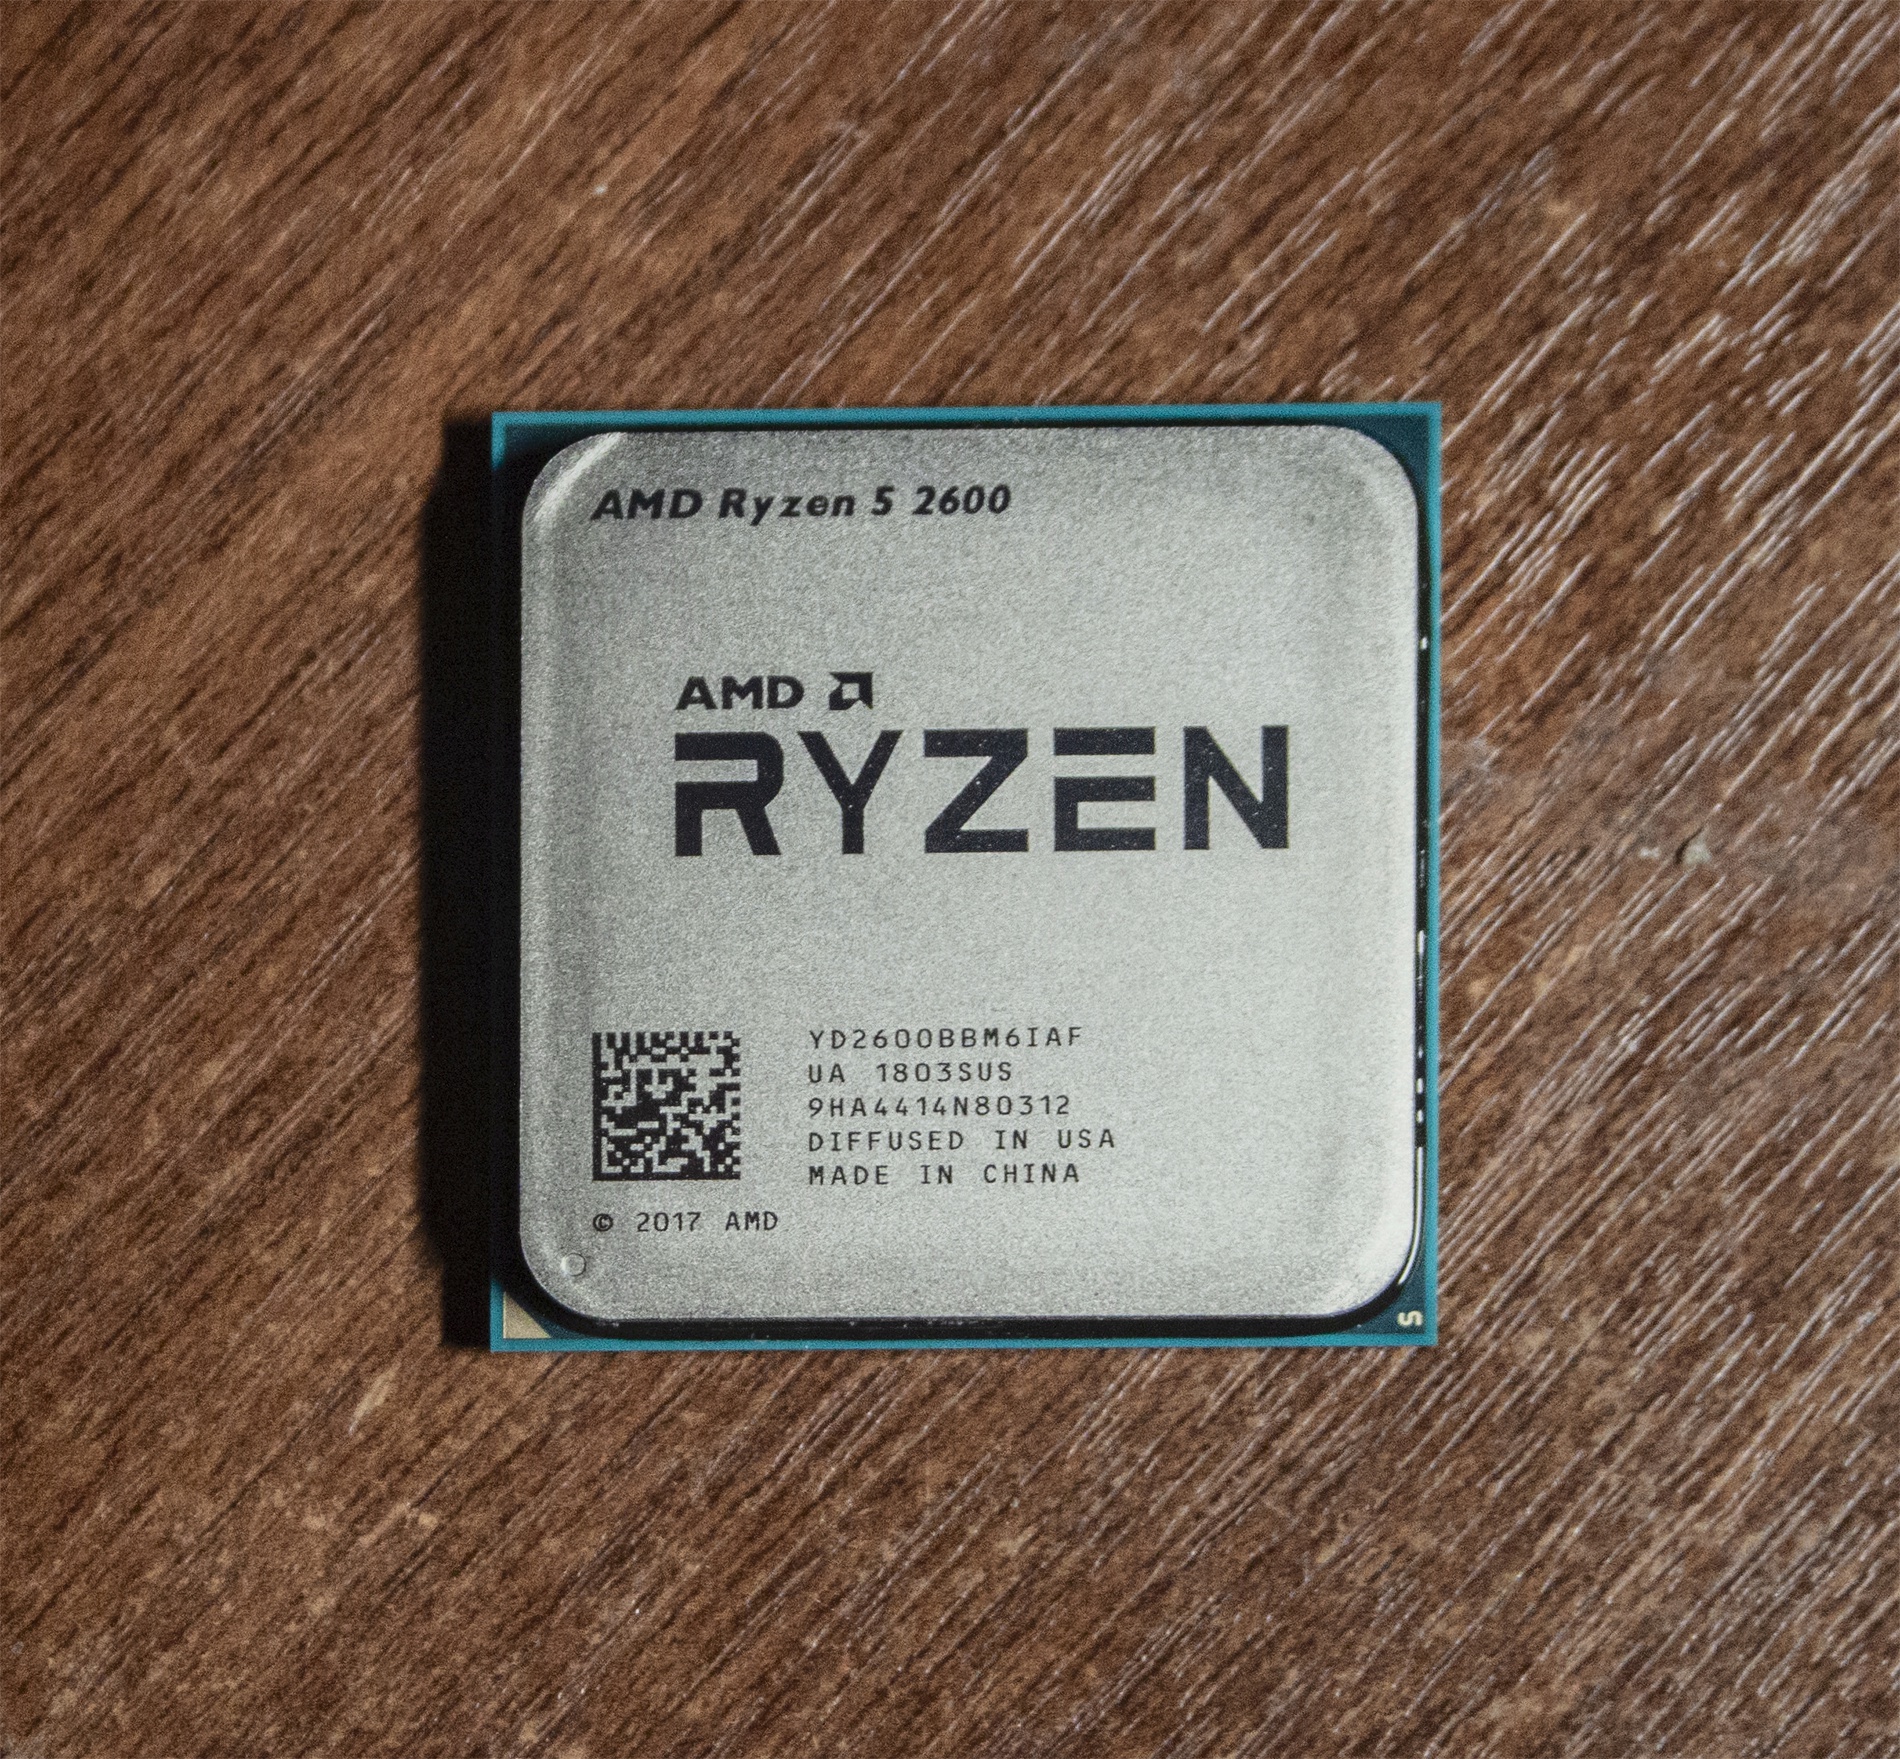 Ryzen 2600 память. AMD Ryzen 5 2600. AMD Ryzen 5 2600 (Box). Процессор AMD Ryzen 5 2600 Six Core. Процессор АМД райзен 5.